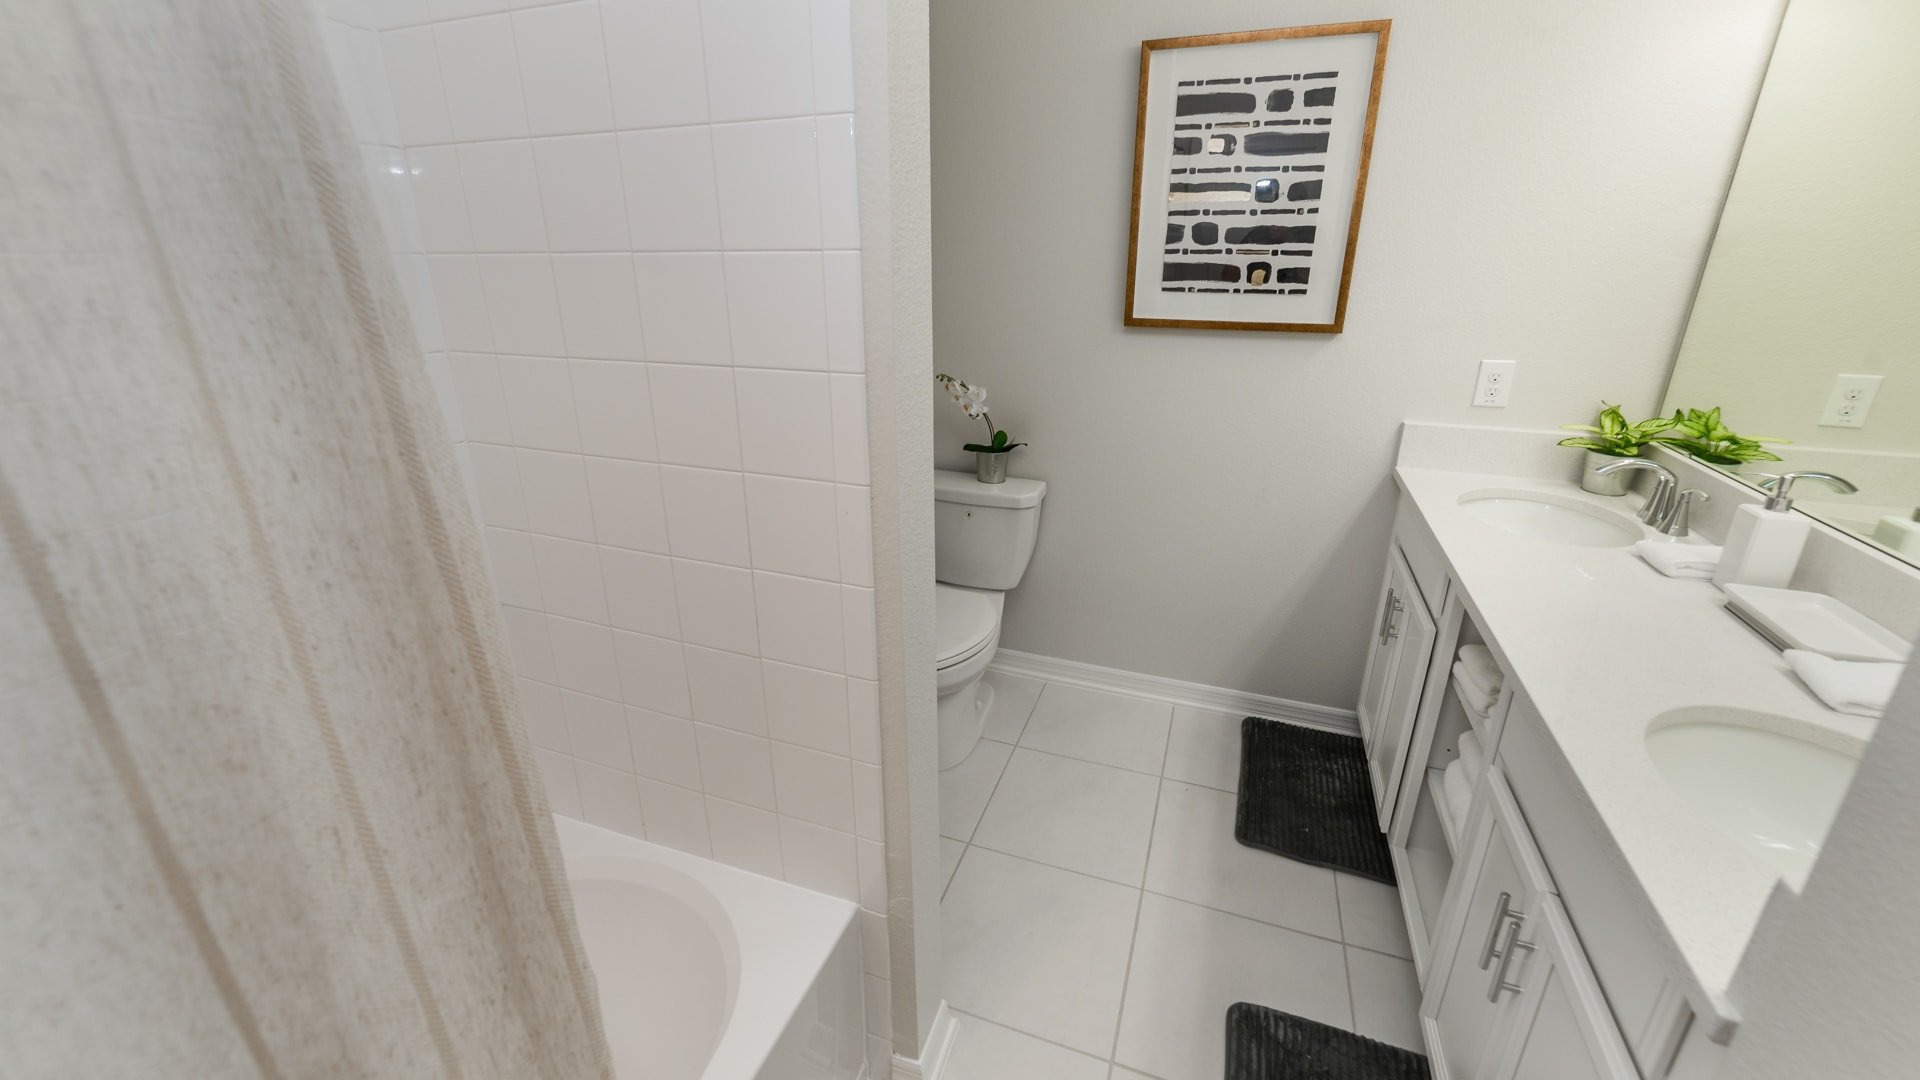 Hall Bathroom
Tub/Shower Combo